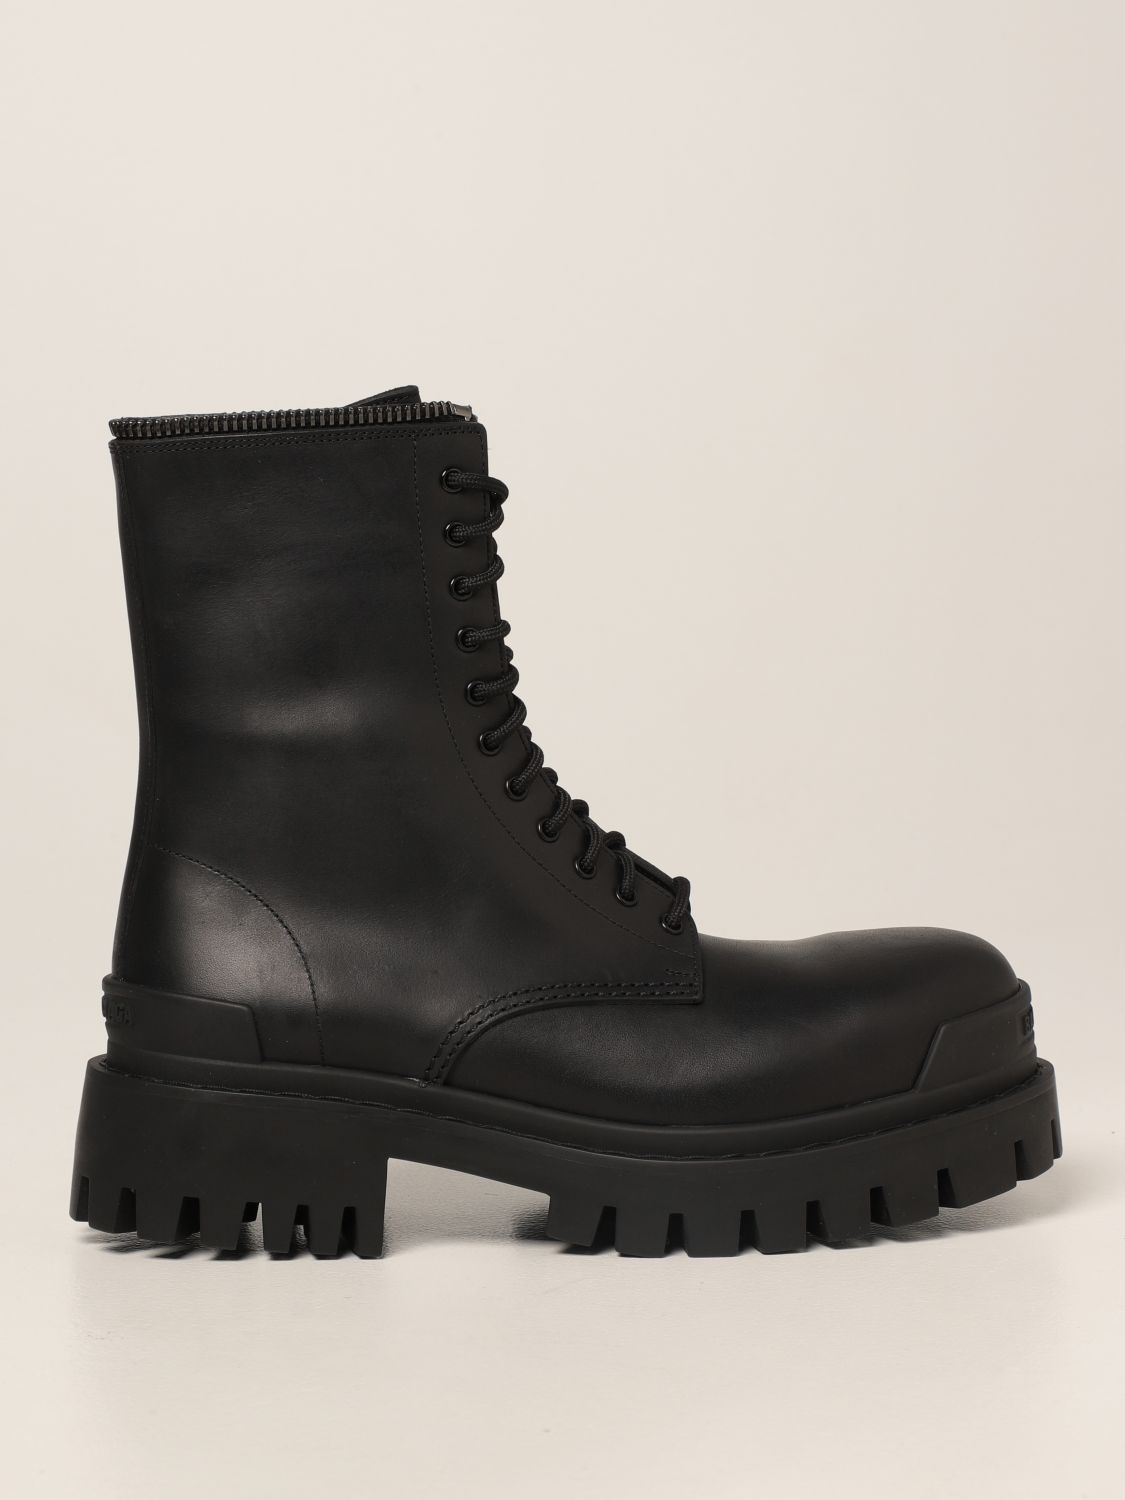 BALENCIAGA: Master leather ankle boot - Black | Balenciaga flat